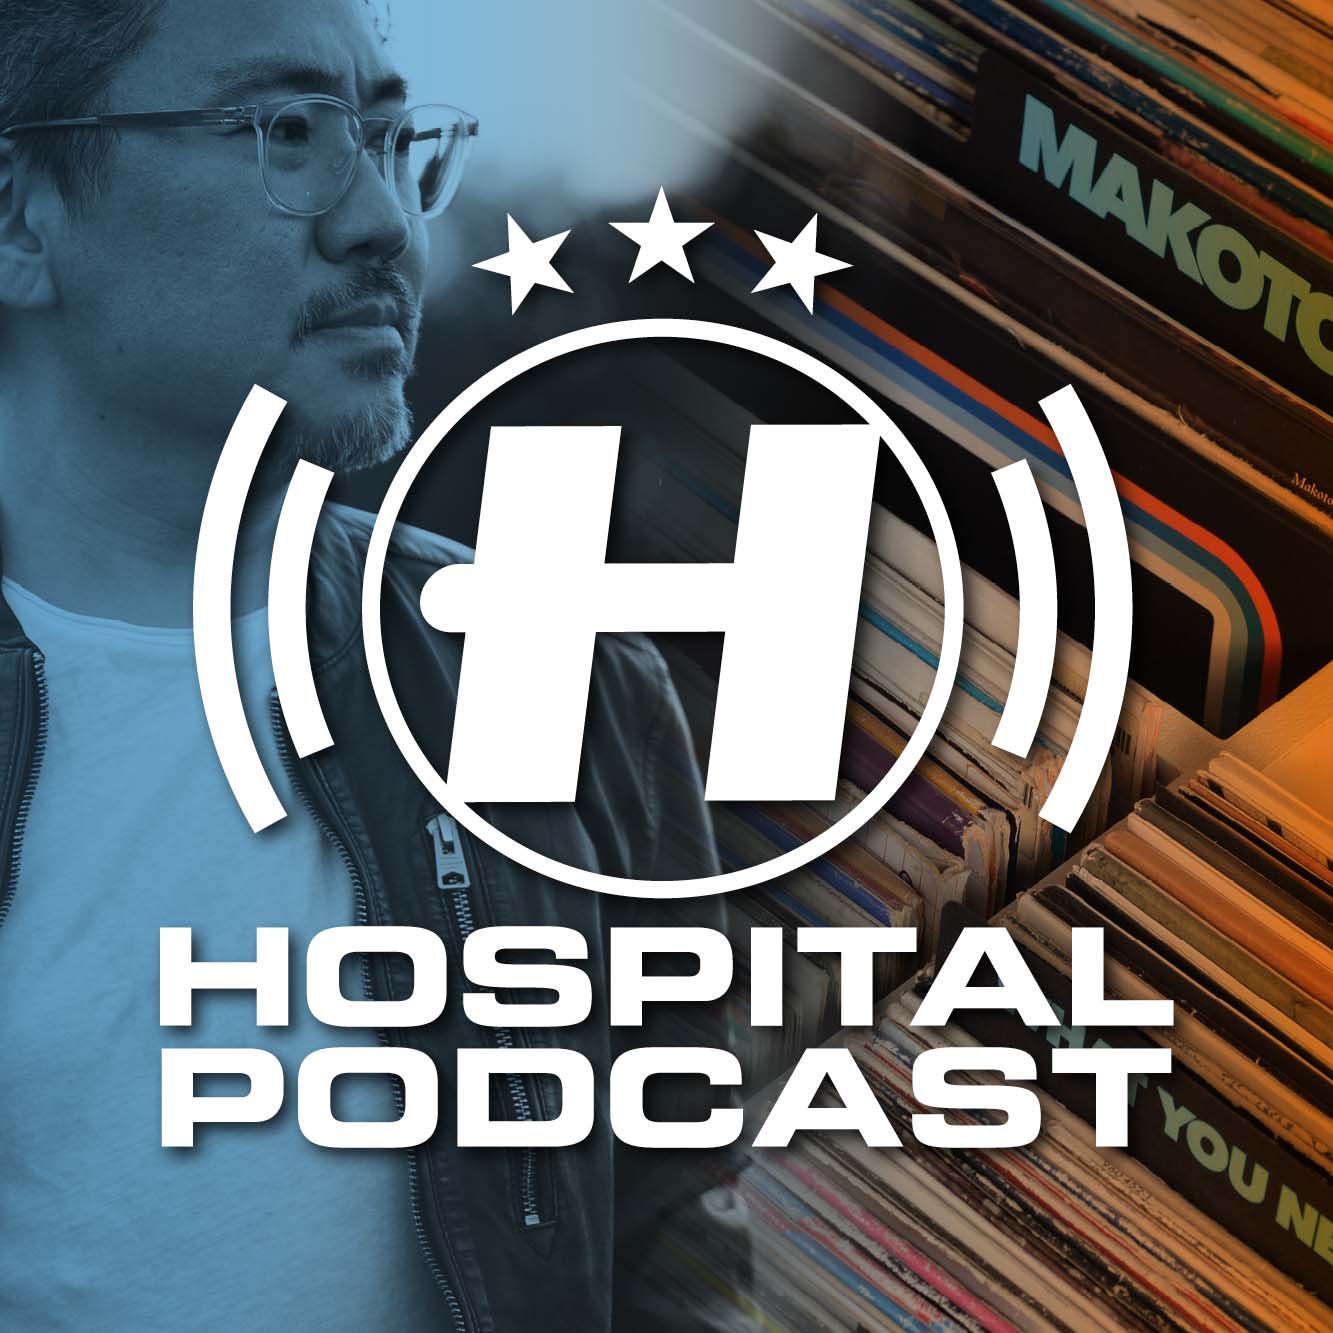 Hospital Podcast 449 with Makoto Artwork